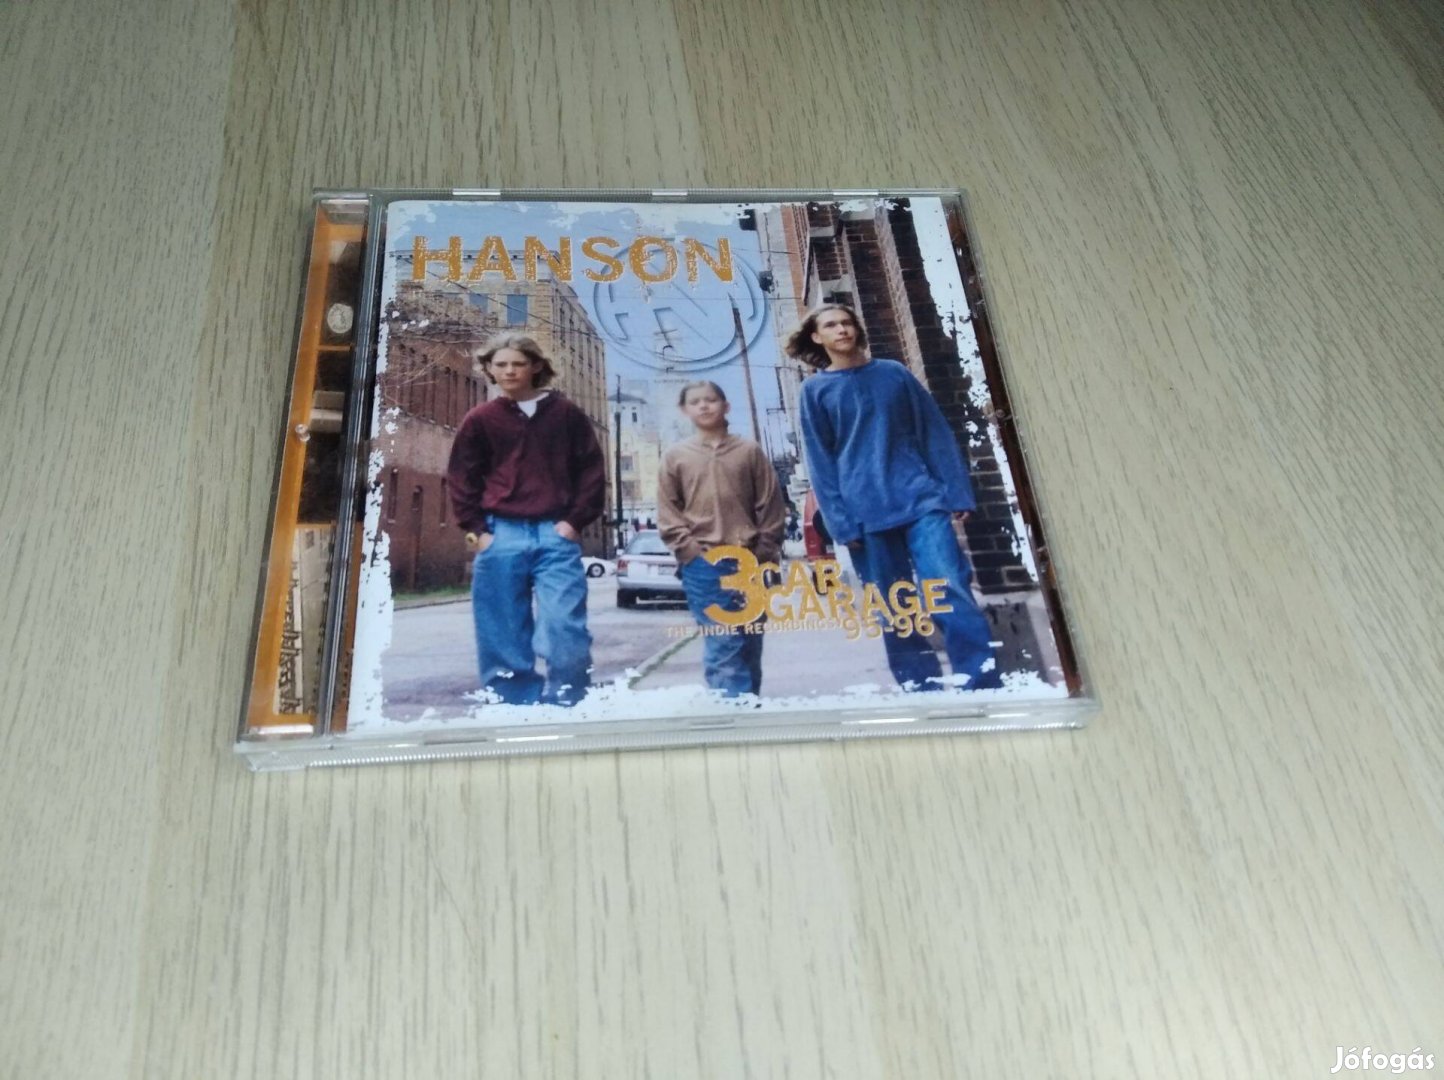 Hanson - 3 Car Garage: The Indie Recordings '95-'96 / CD